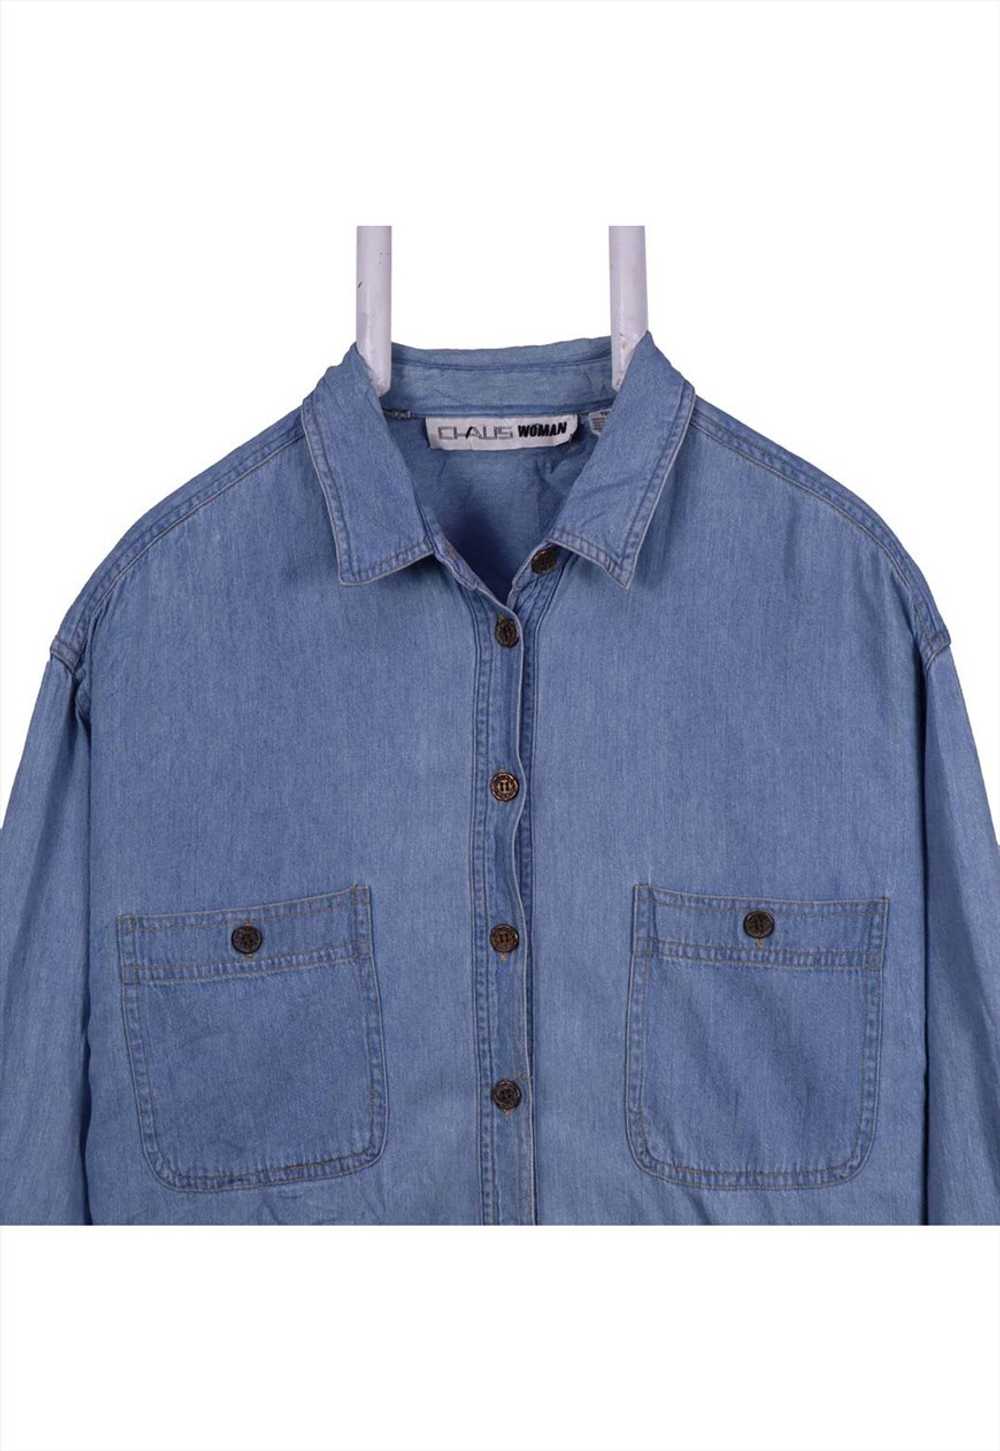 Vintage 90's Chaus Woman Shirt Denim Long Sleeve … - image 2